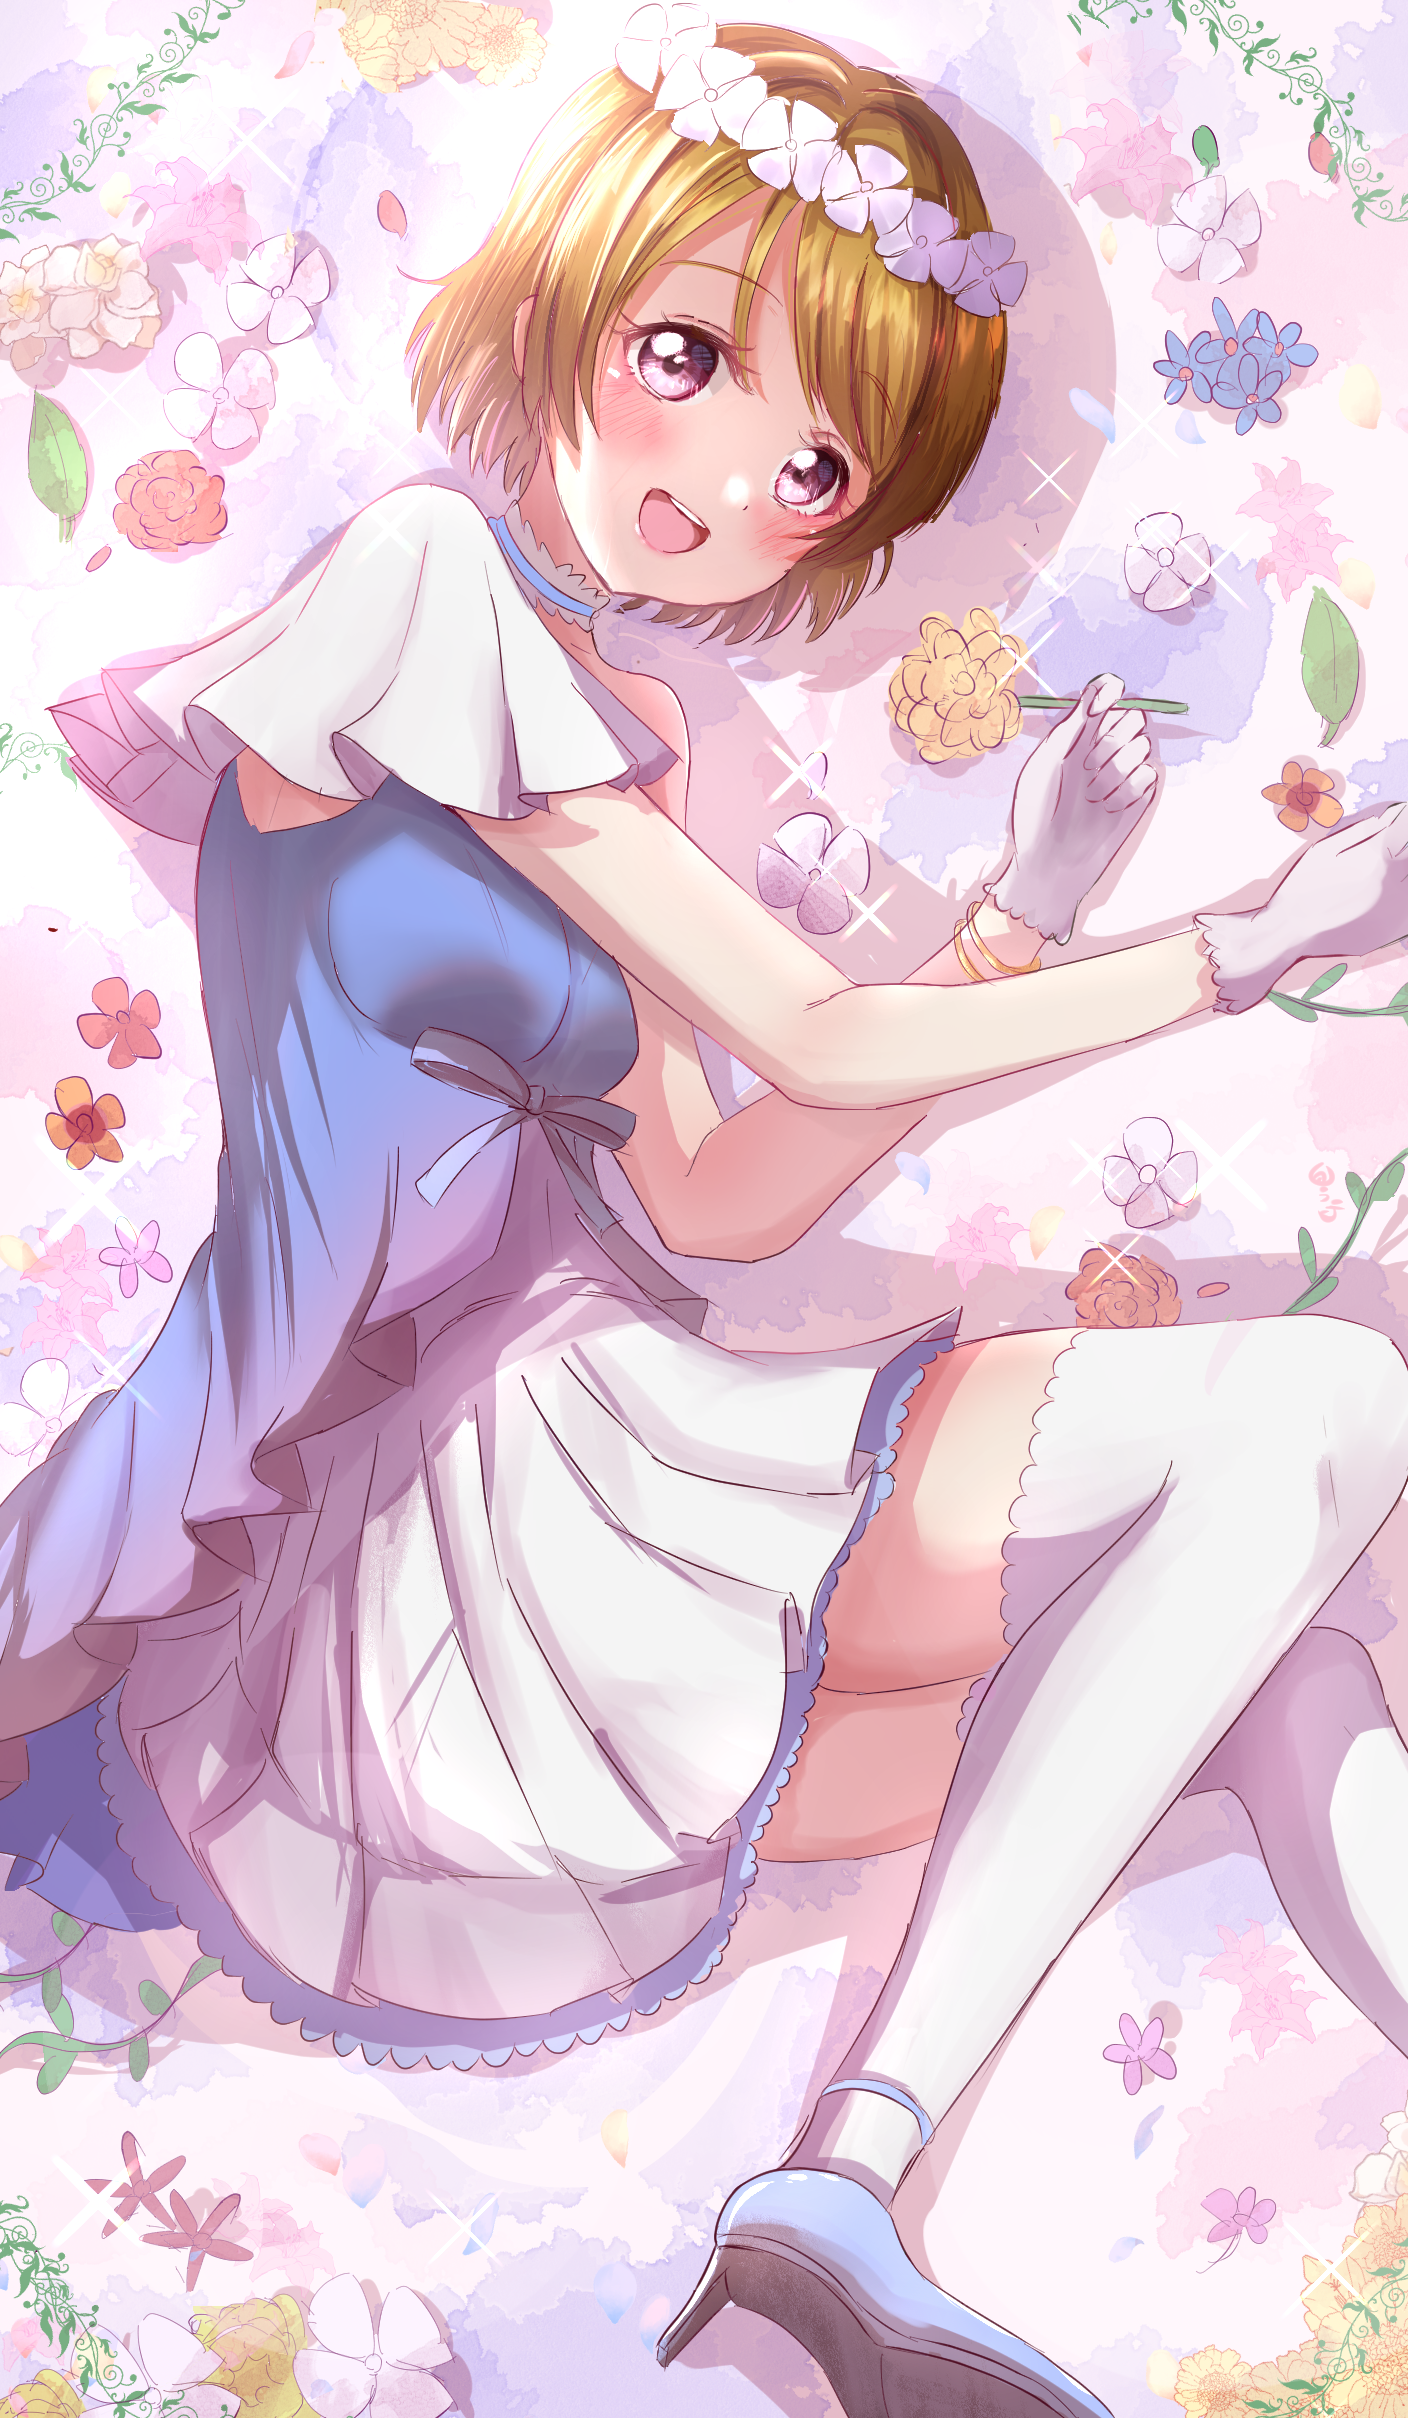 Anime Girls Heels Love Live Koizumi Hanayo Vertical Blushing Flowers Petals Leaves Lying On Side Flo 1408x2418